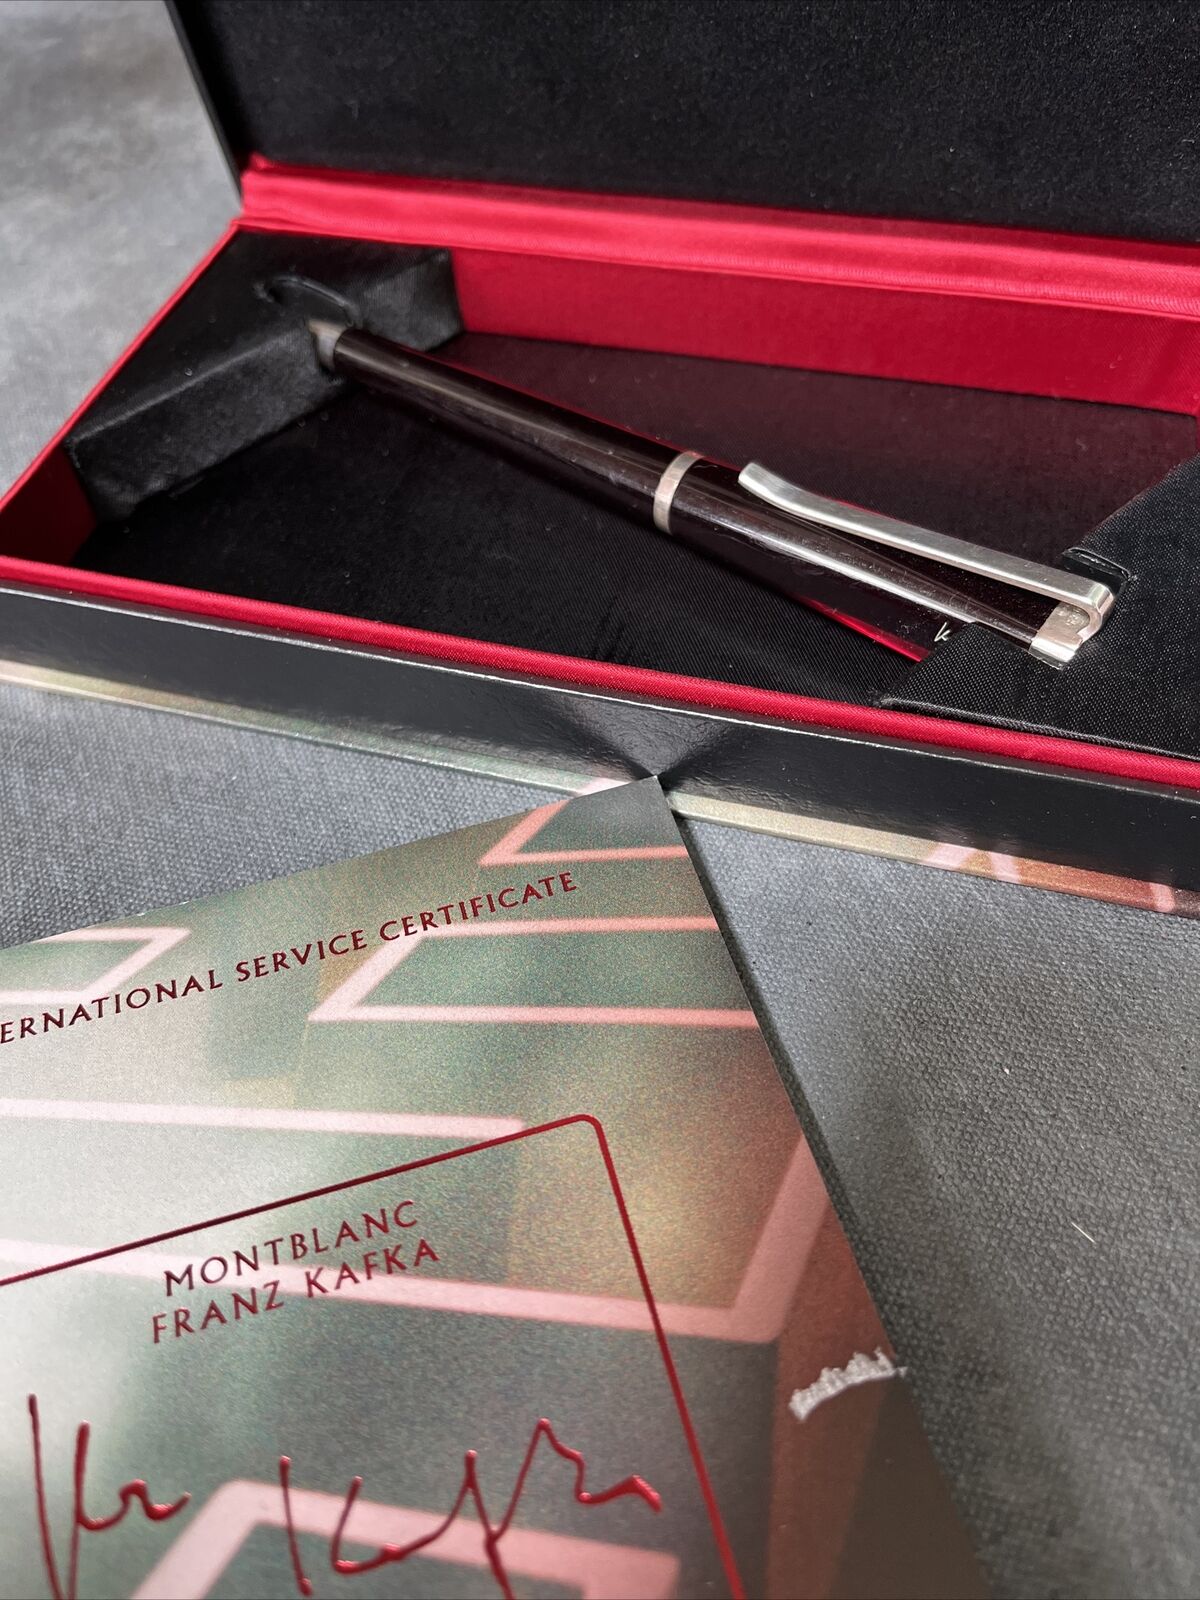 Montblanc Franz Kafka Writers Edition Ballpoin Pen Preowned Original Box